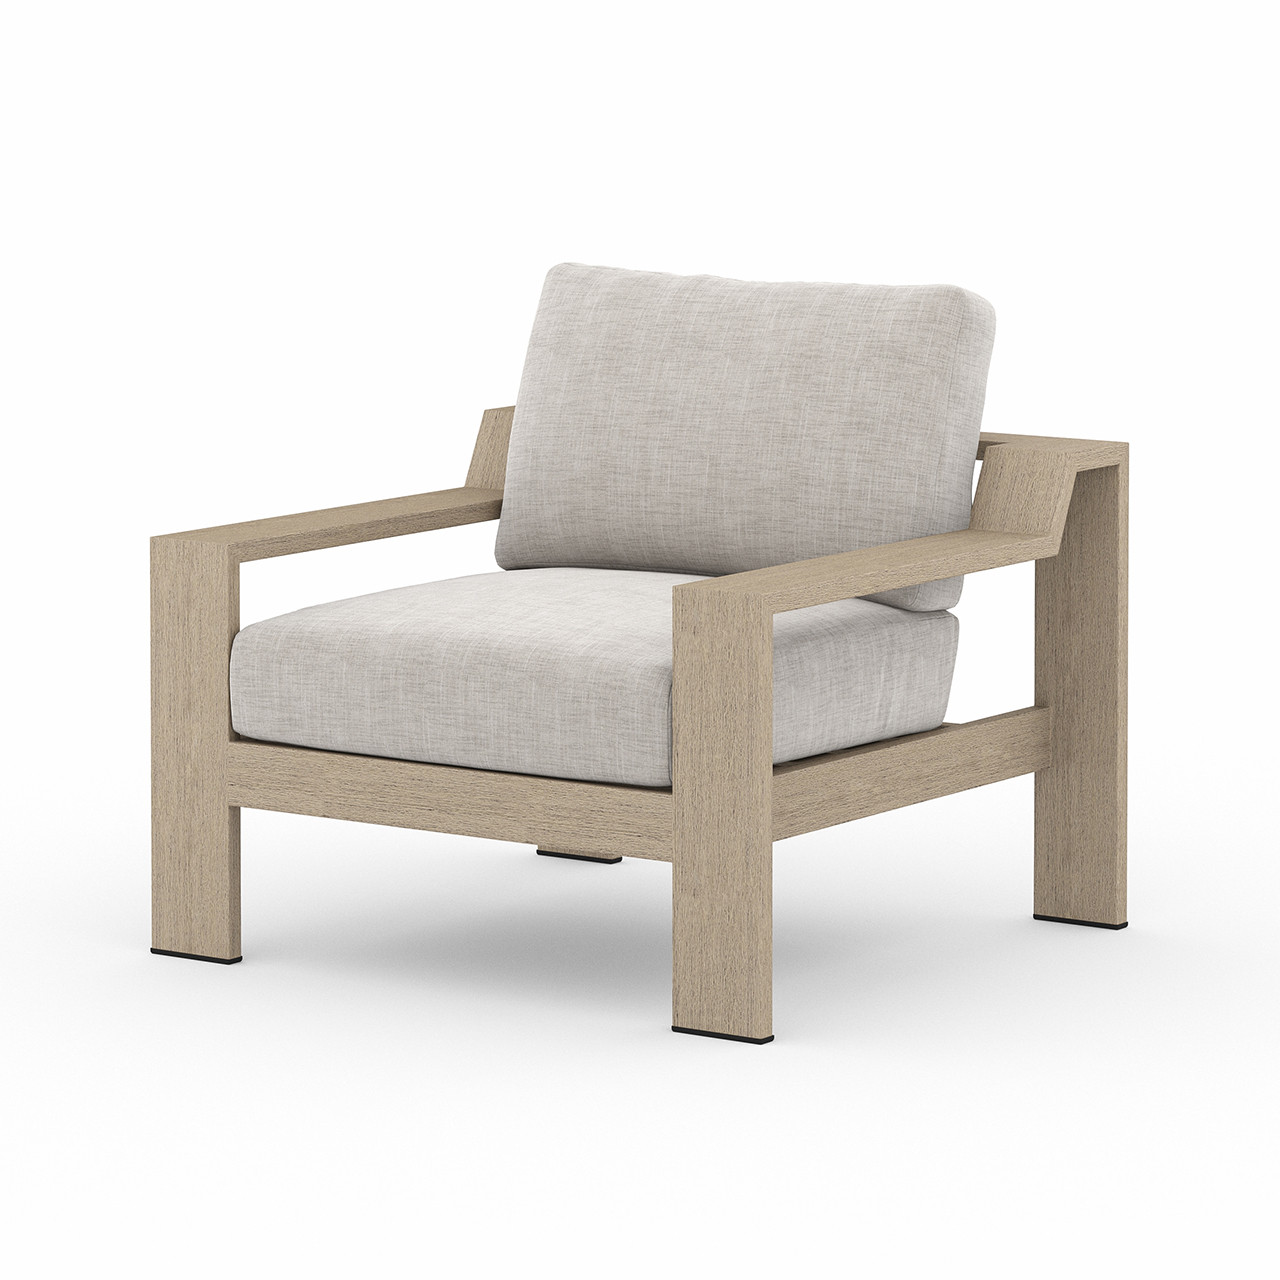 Hope Ranch Teak Outdoor Chair - Brown/Stone Grey